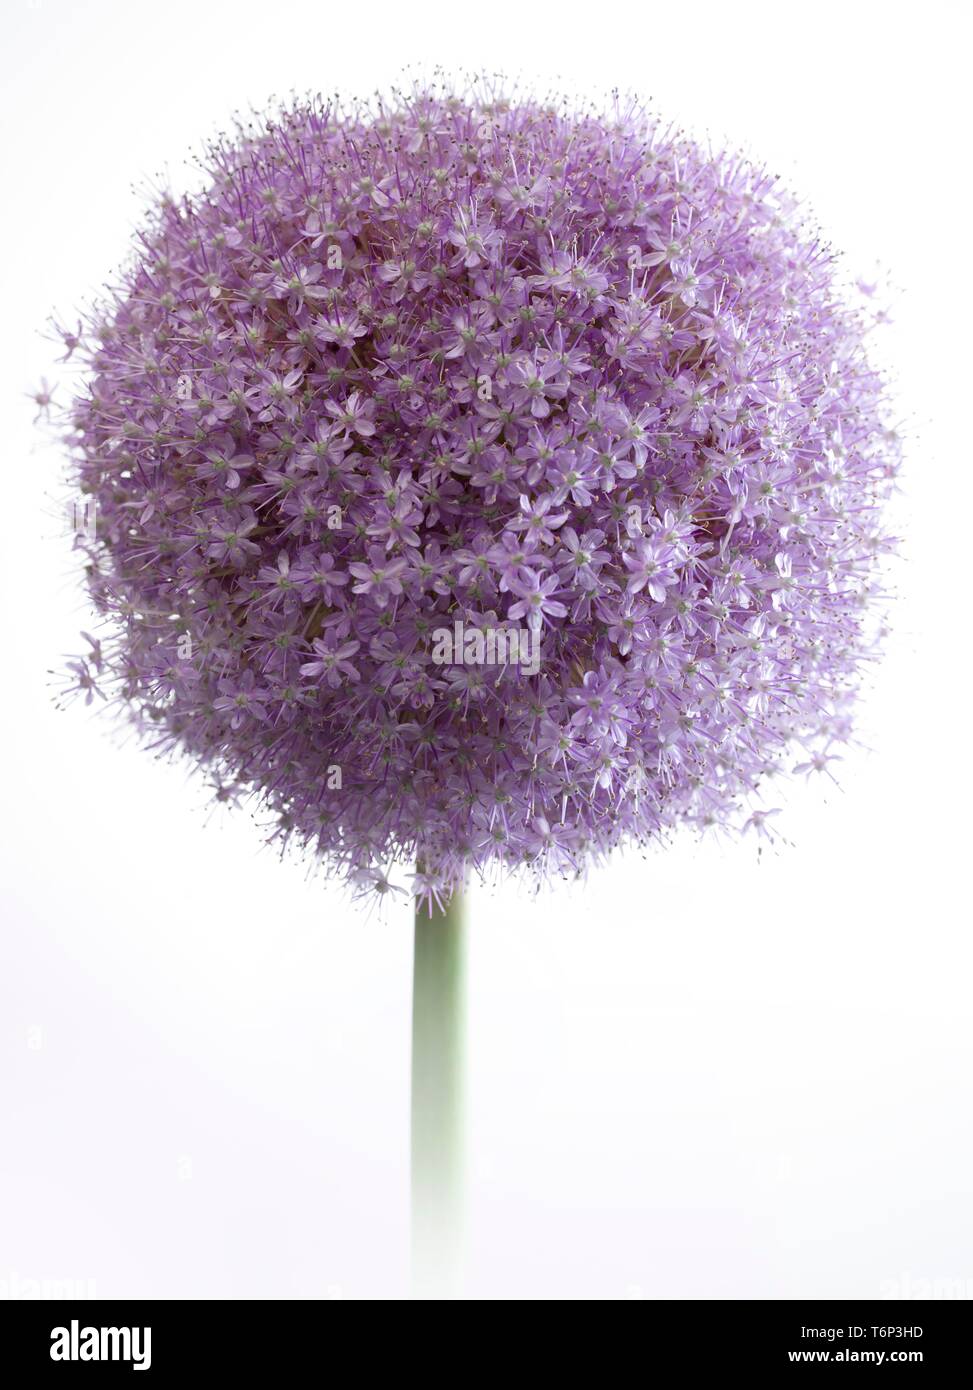 Purple flowering ornamental garlic, giant ornamental garlic (Allium), inflorescence, Germany Stock Photo